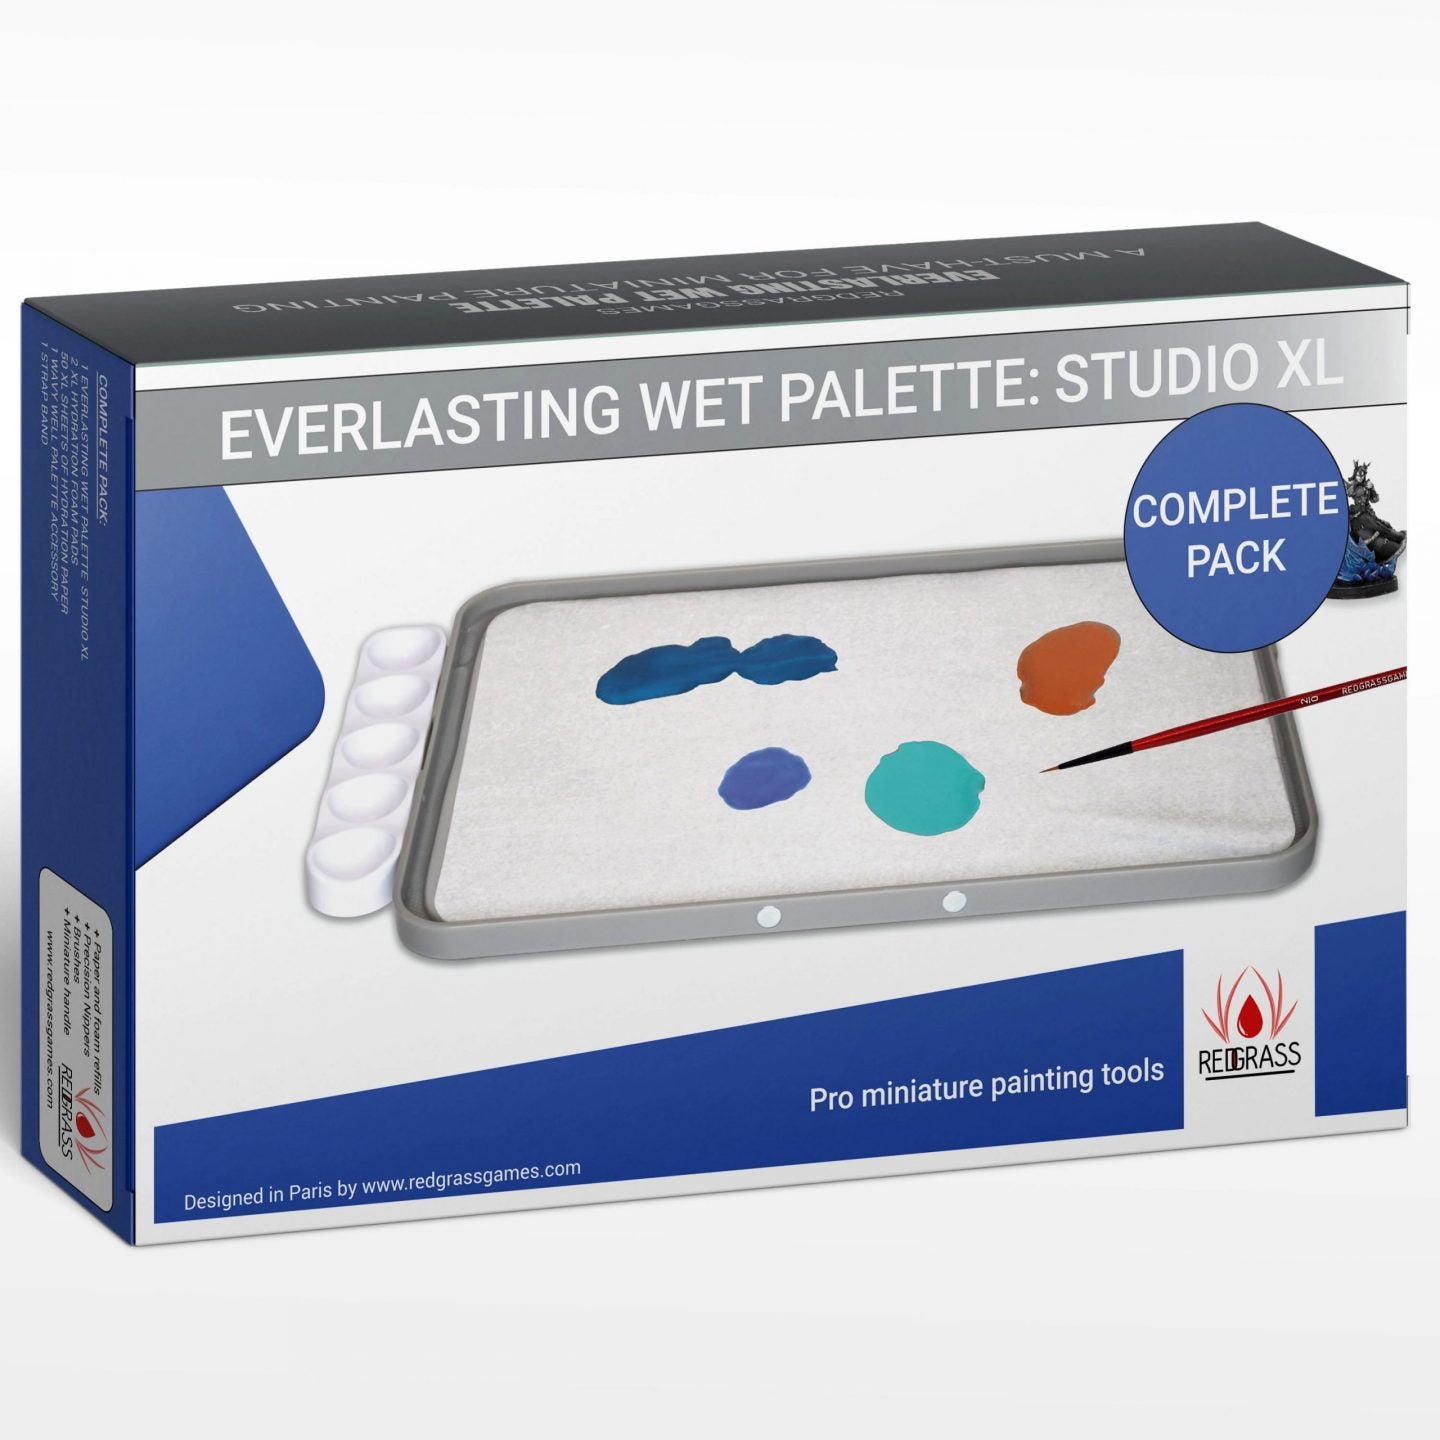 Redgrass Everlasting Wet Palette Studio XL Complete Blue